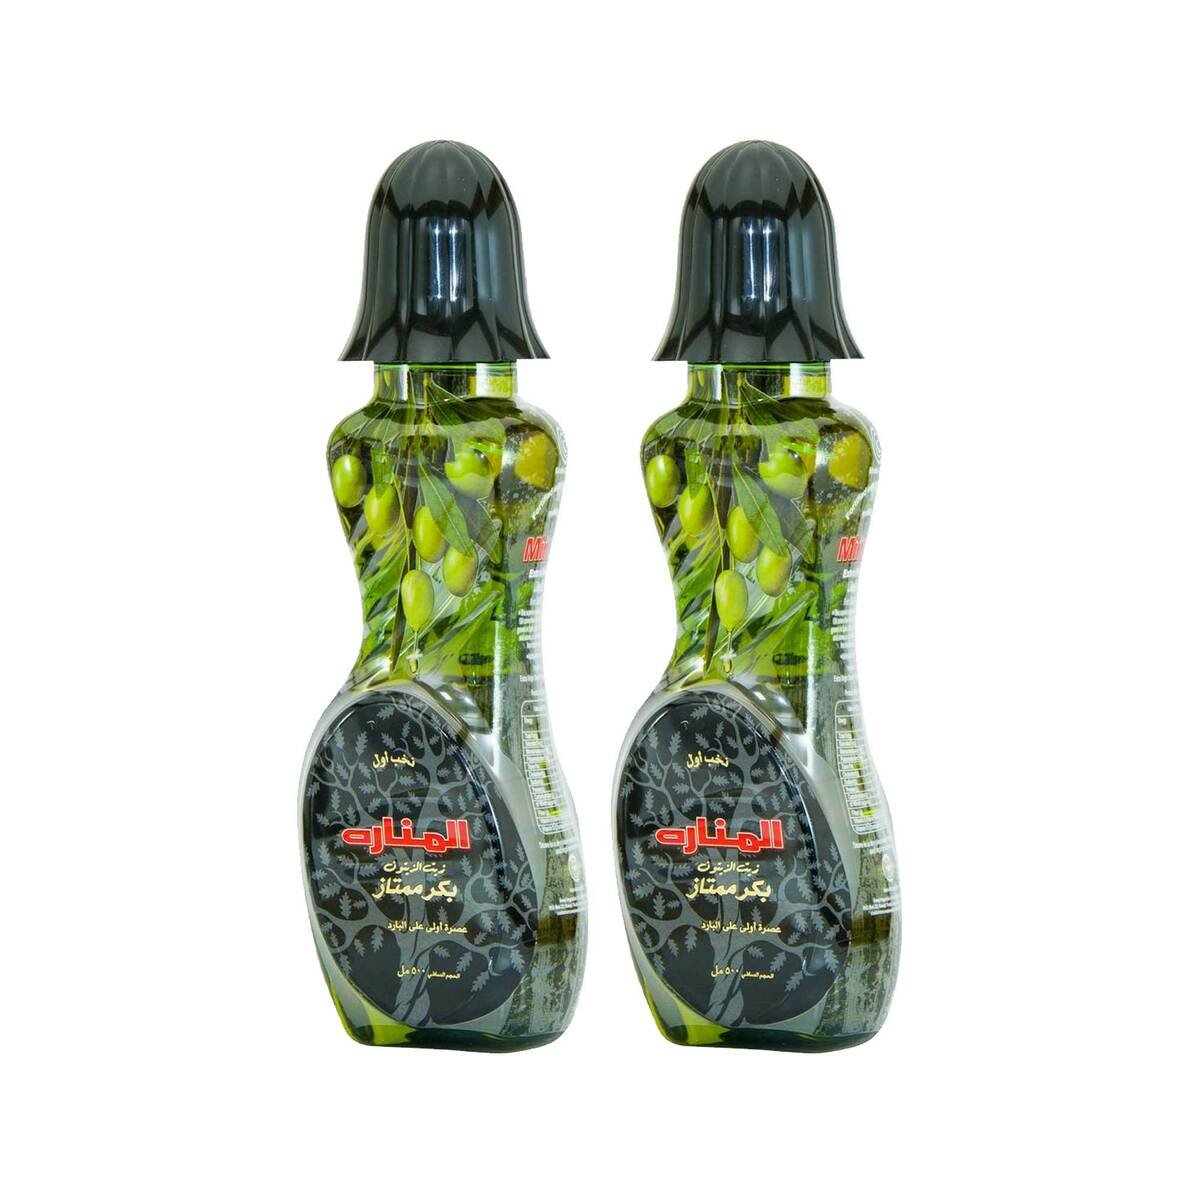 Minara Extra Virgin Olive Oil 2 x 500ml